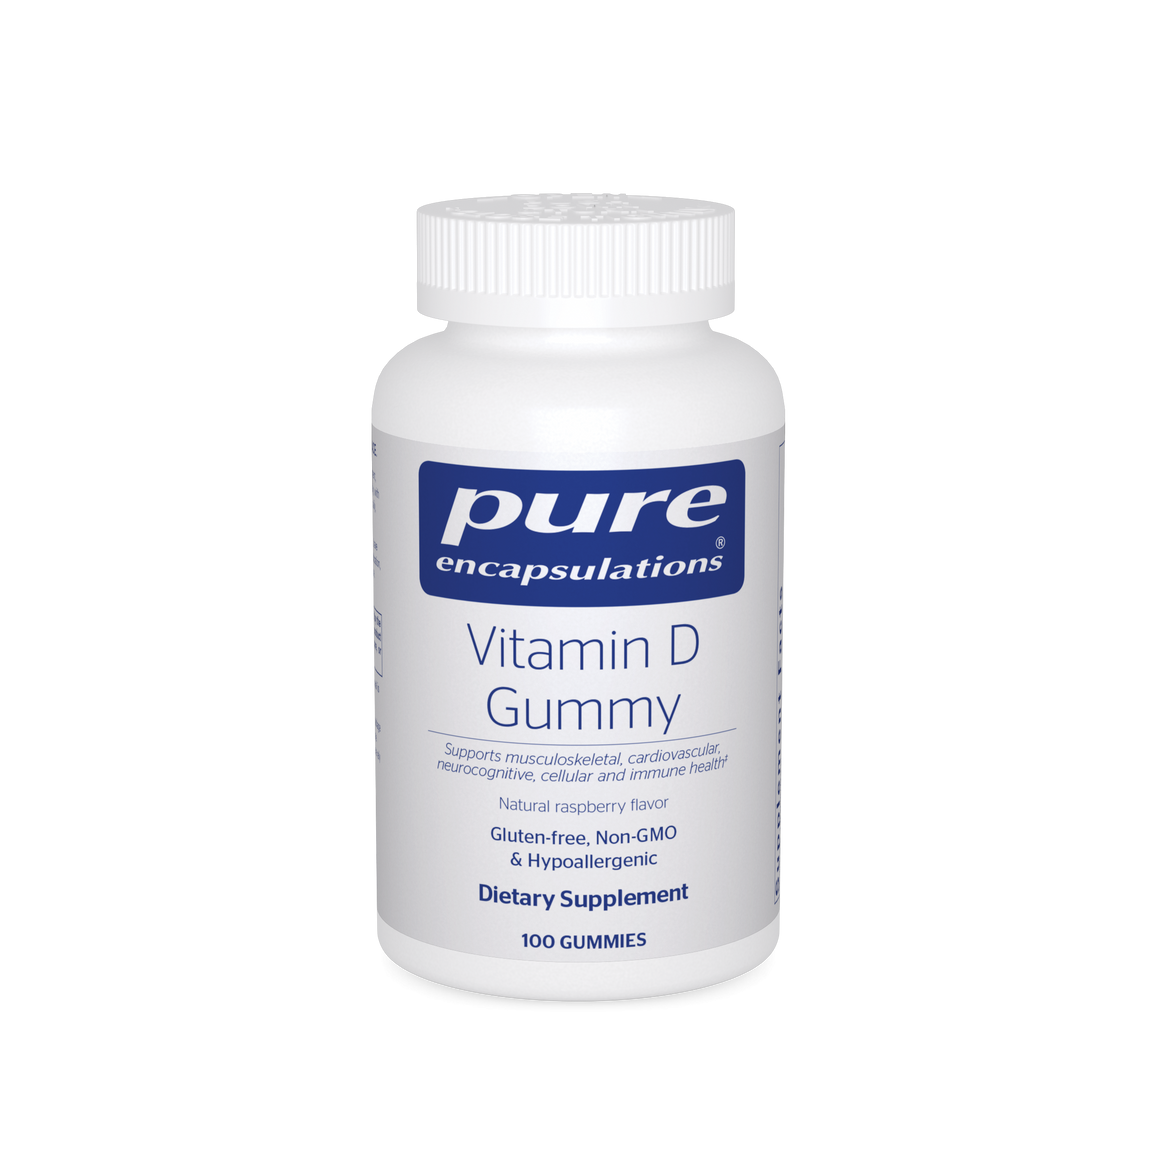 Vitamin D Gummy - Pure Encapsulations - 100 gummies